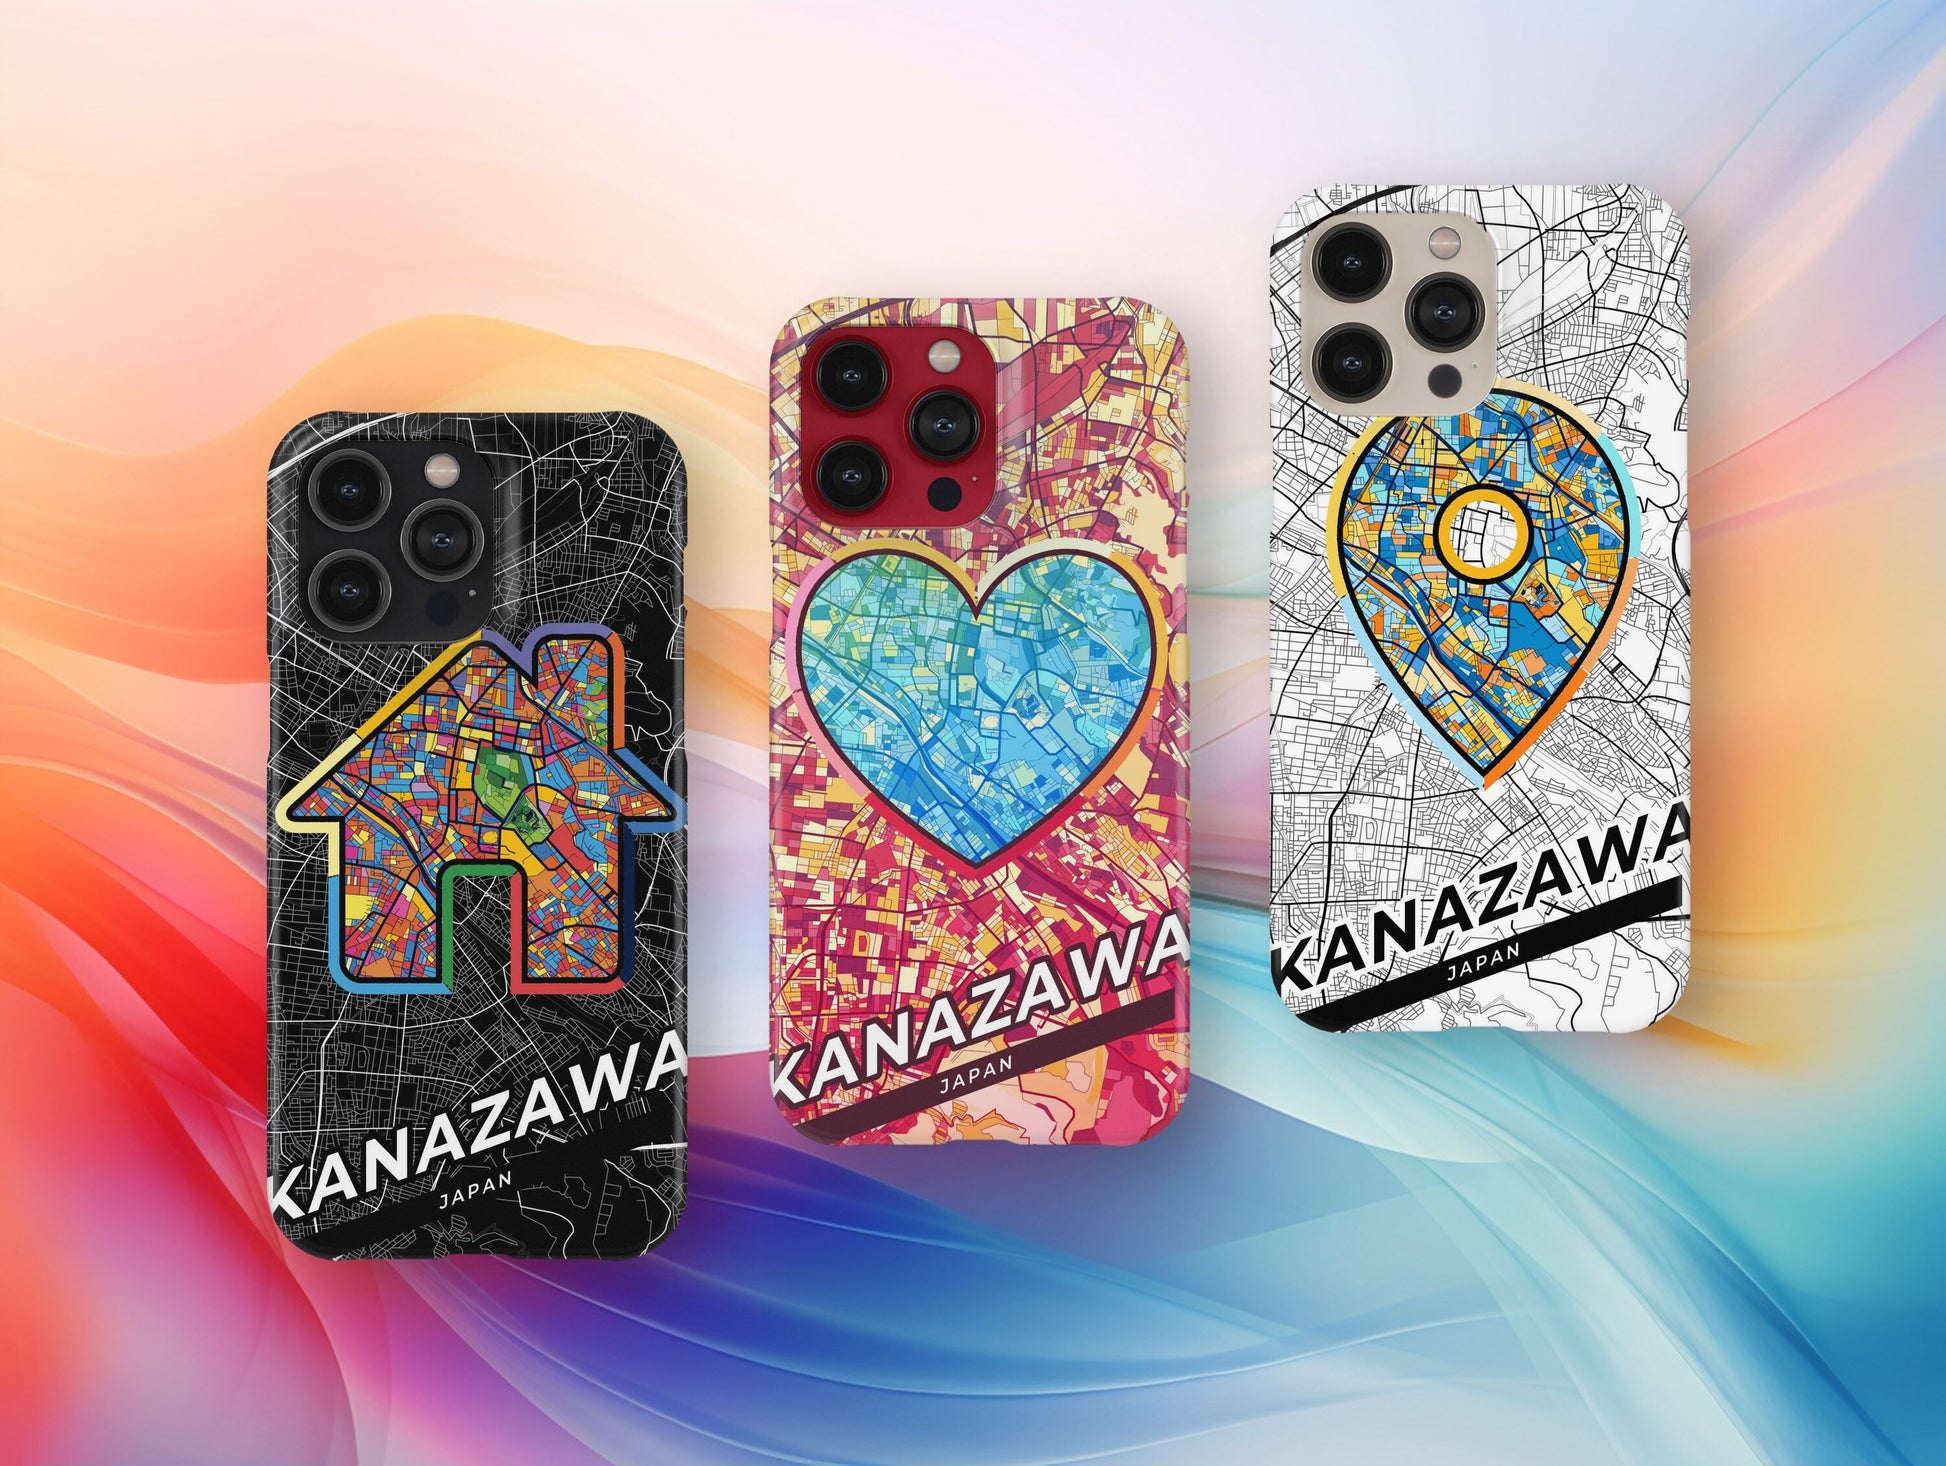 Kanazawa Japan slim phone case with colorful icon. Birthday, wedding or housewarming gift. Couple match cases.